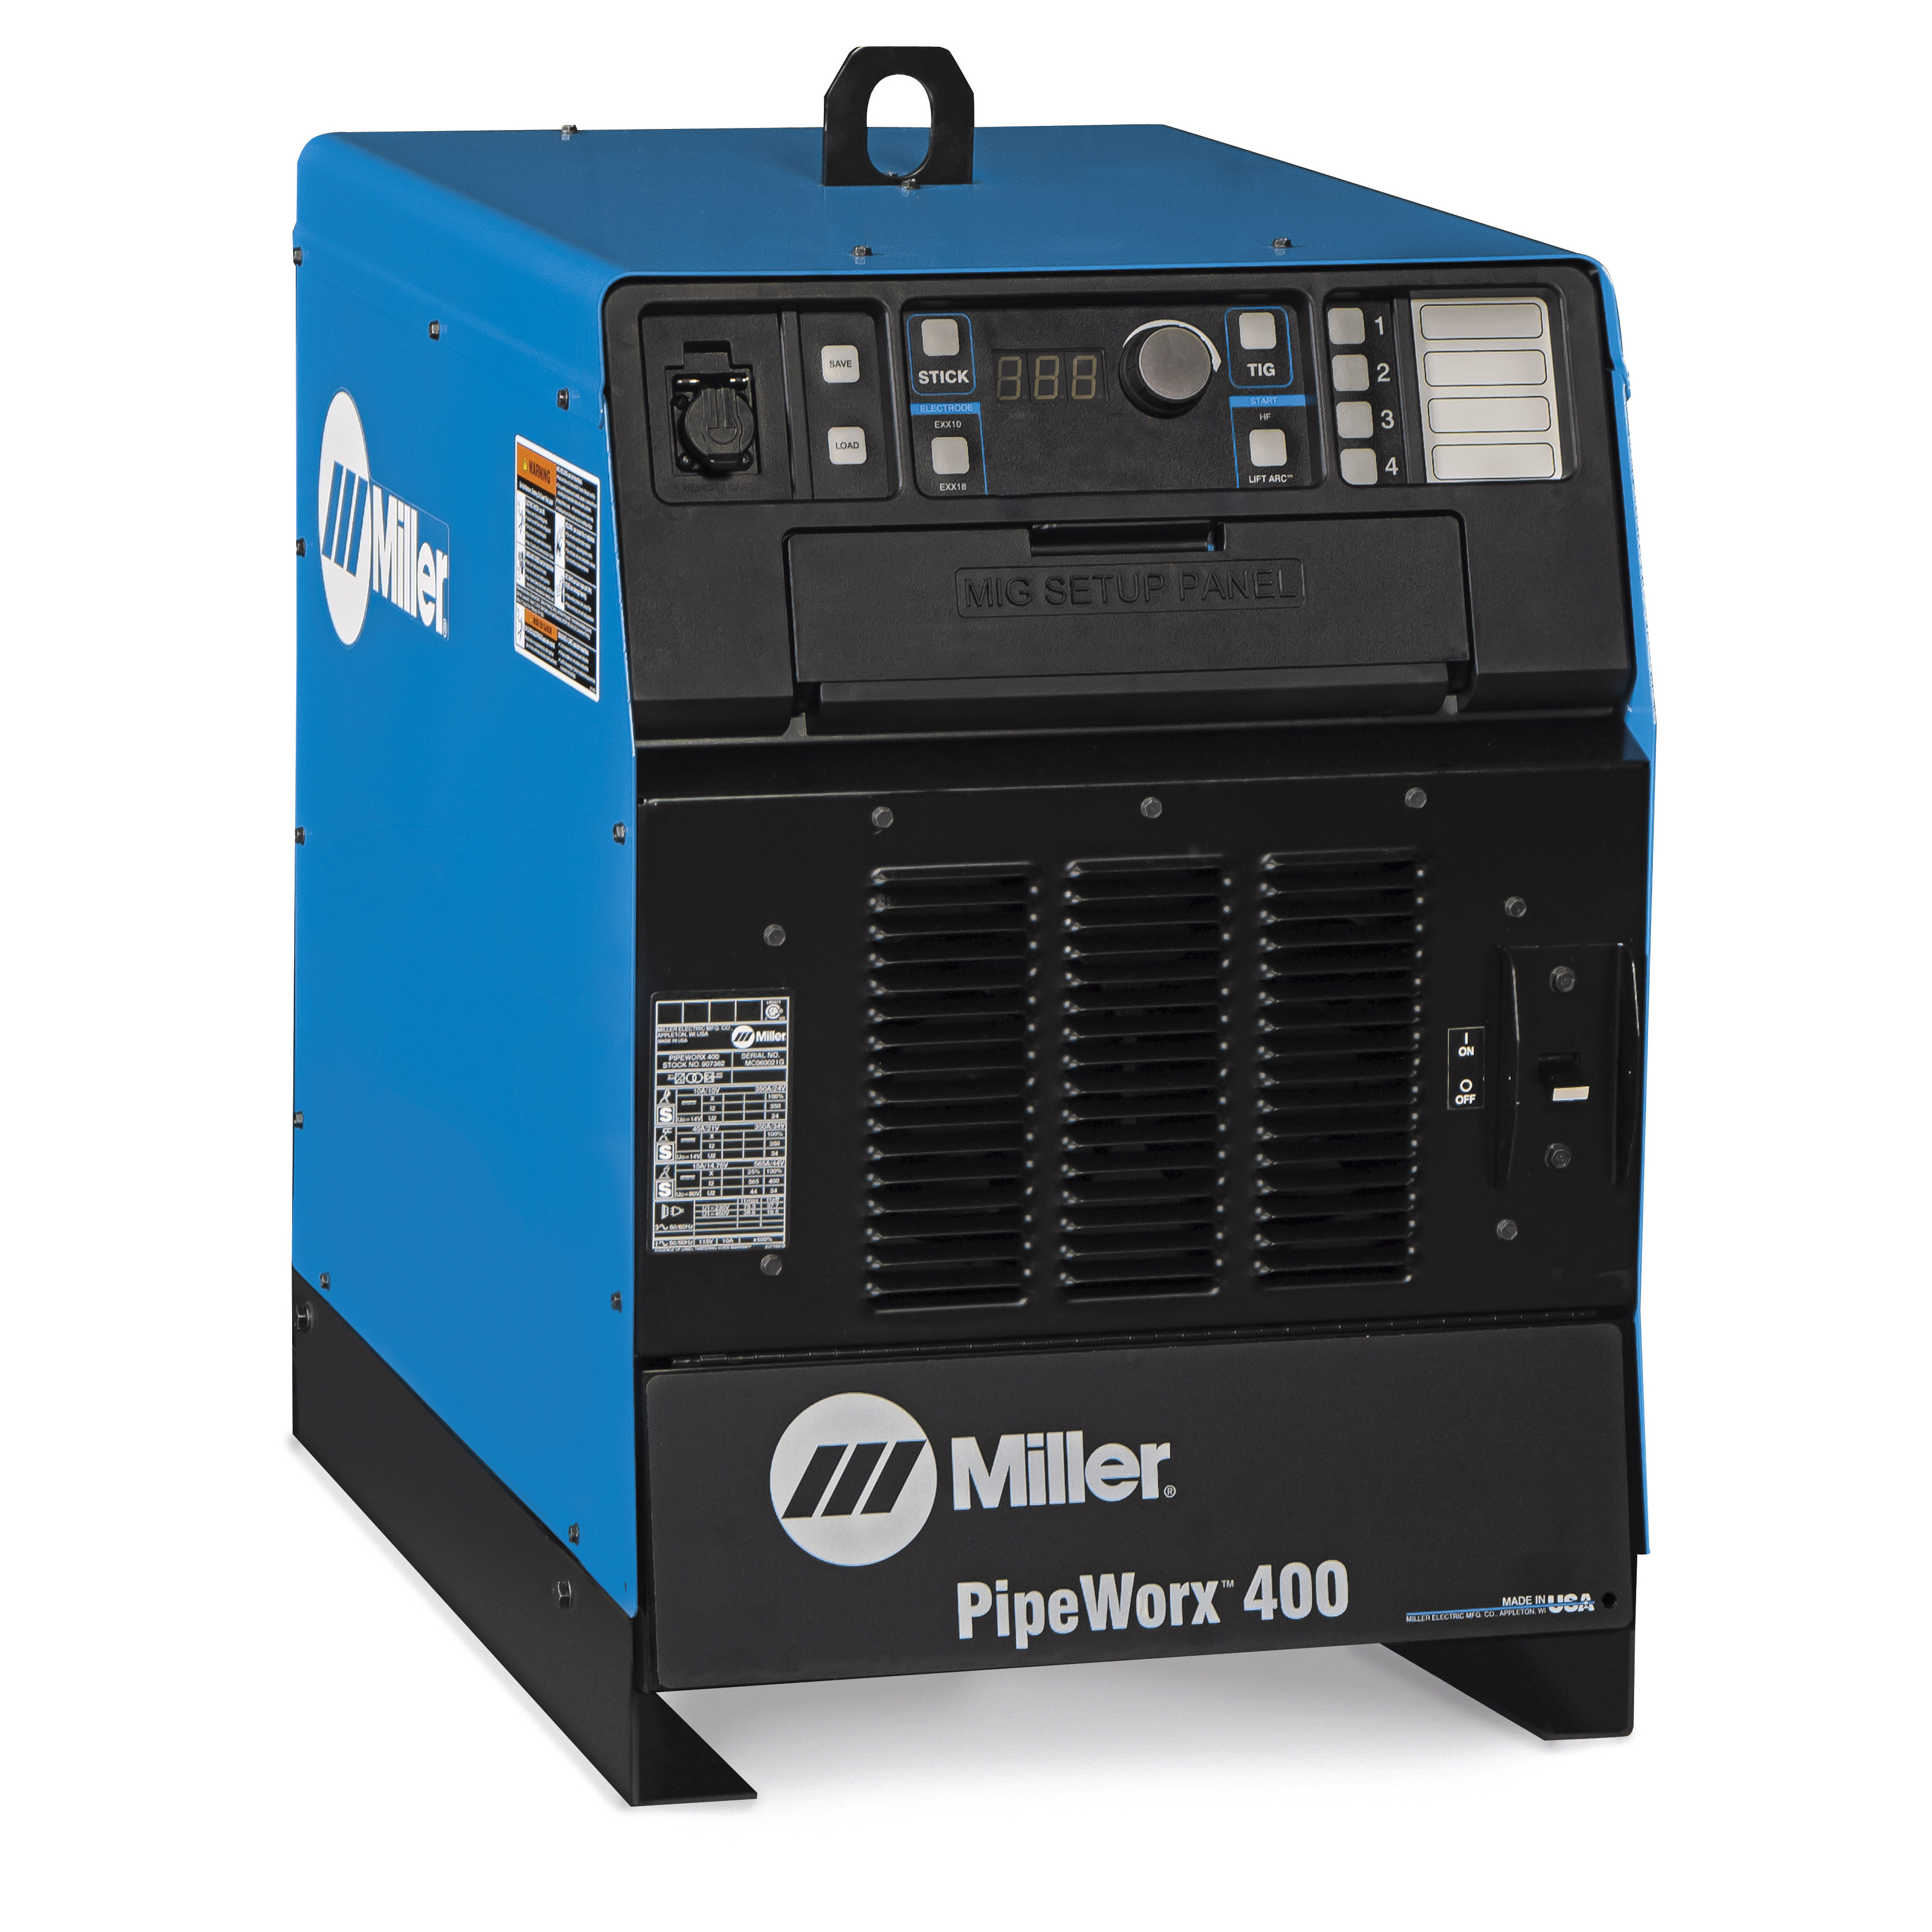 Miller PipeWorx Power Source 230/460V